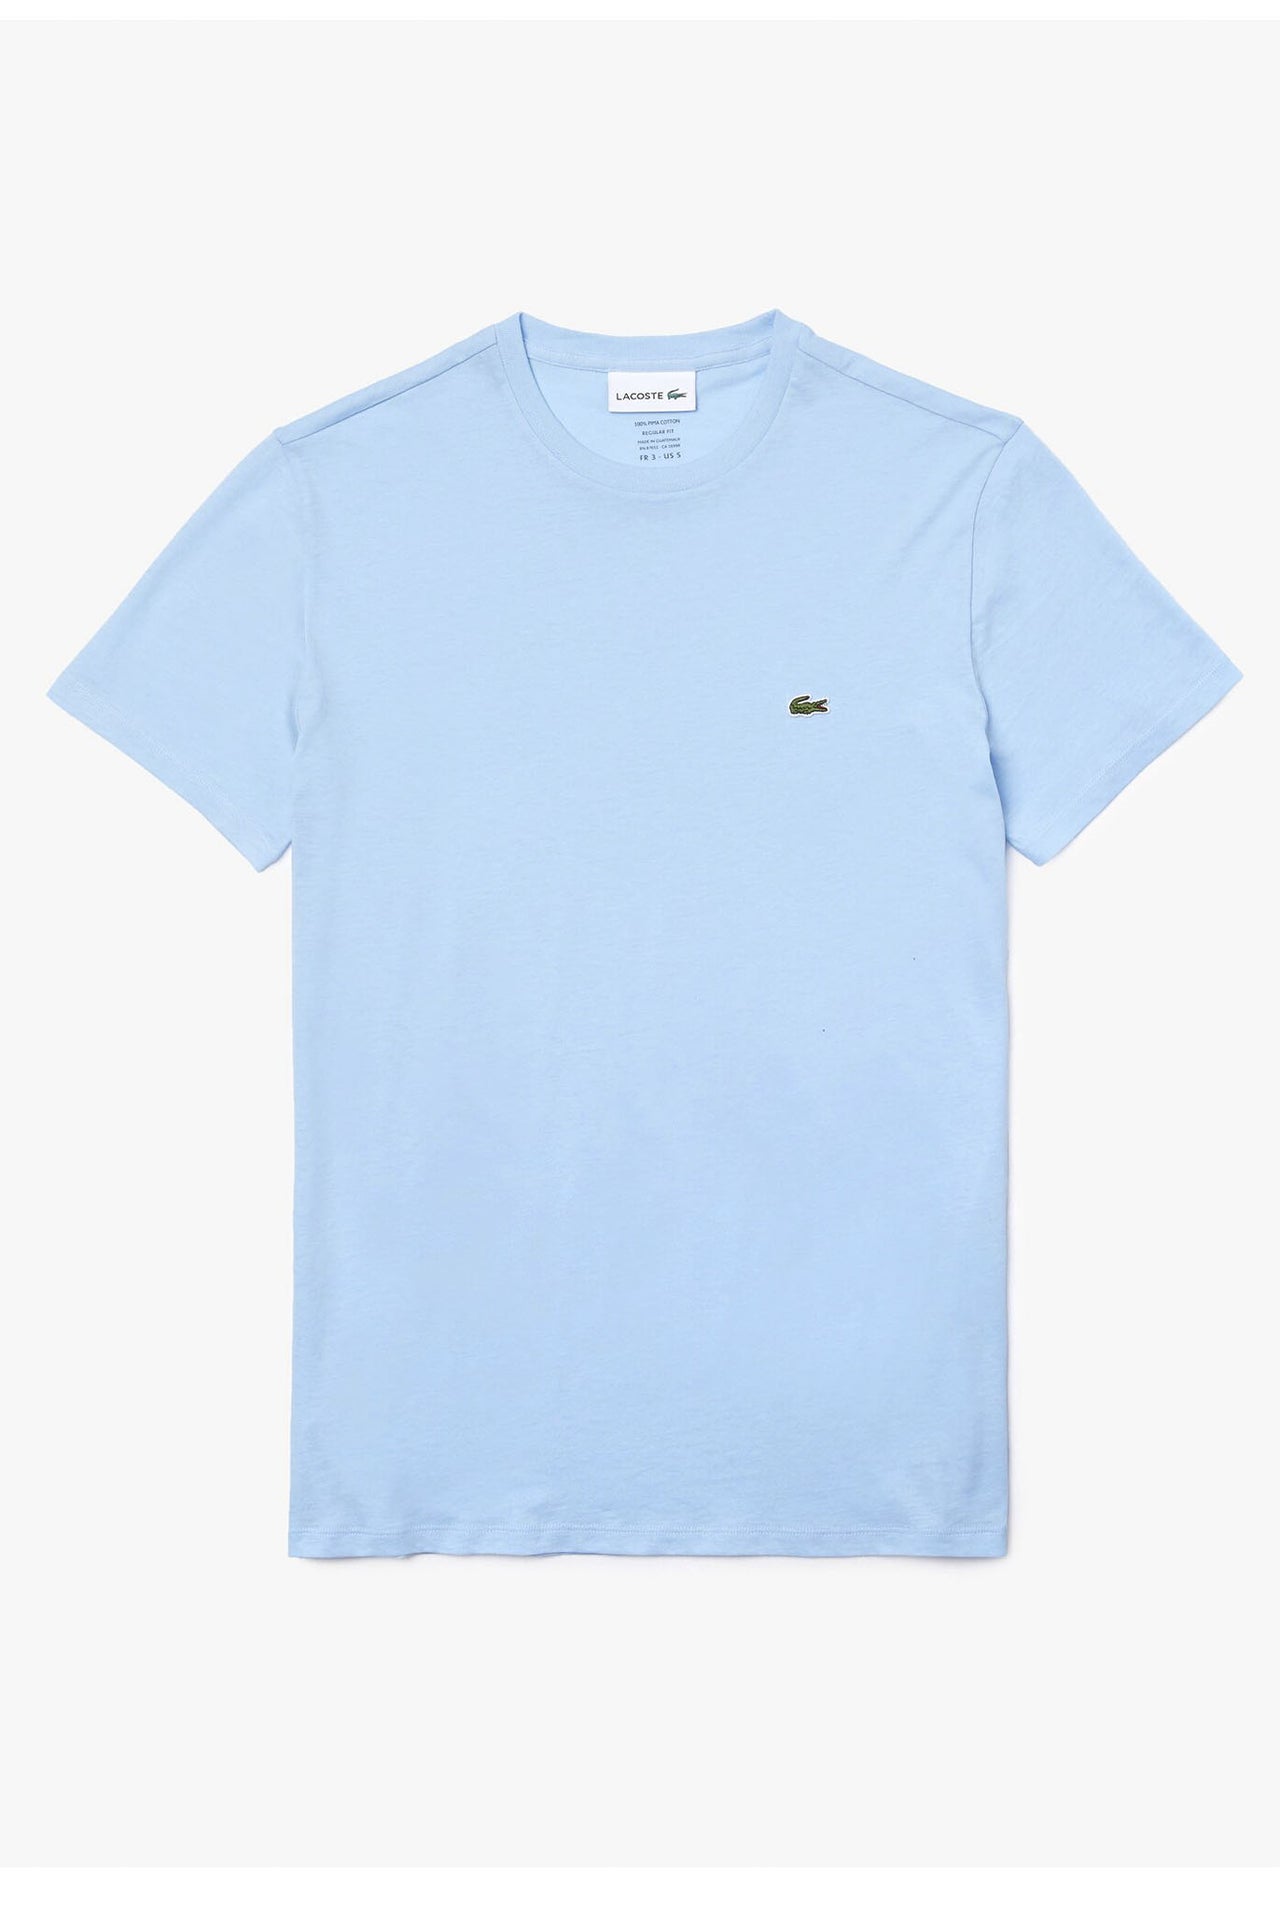 Camiseta Lacoste Azul Cielo